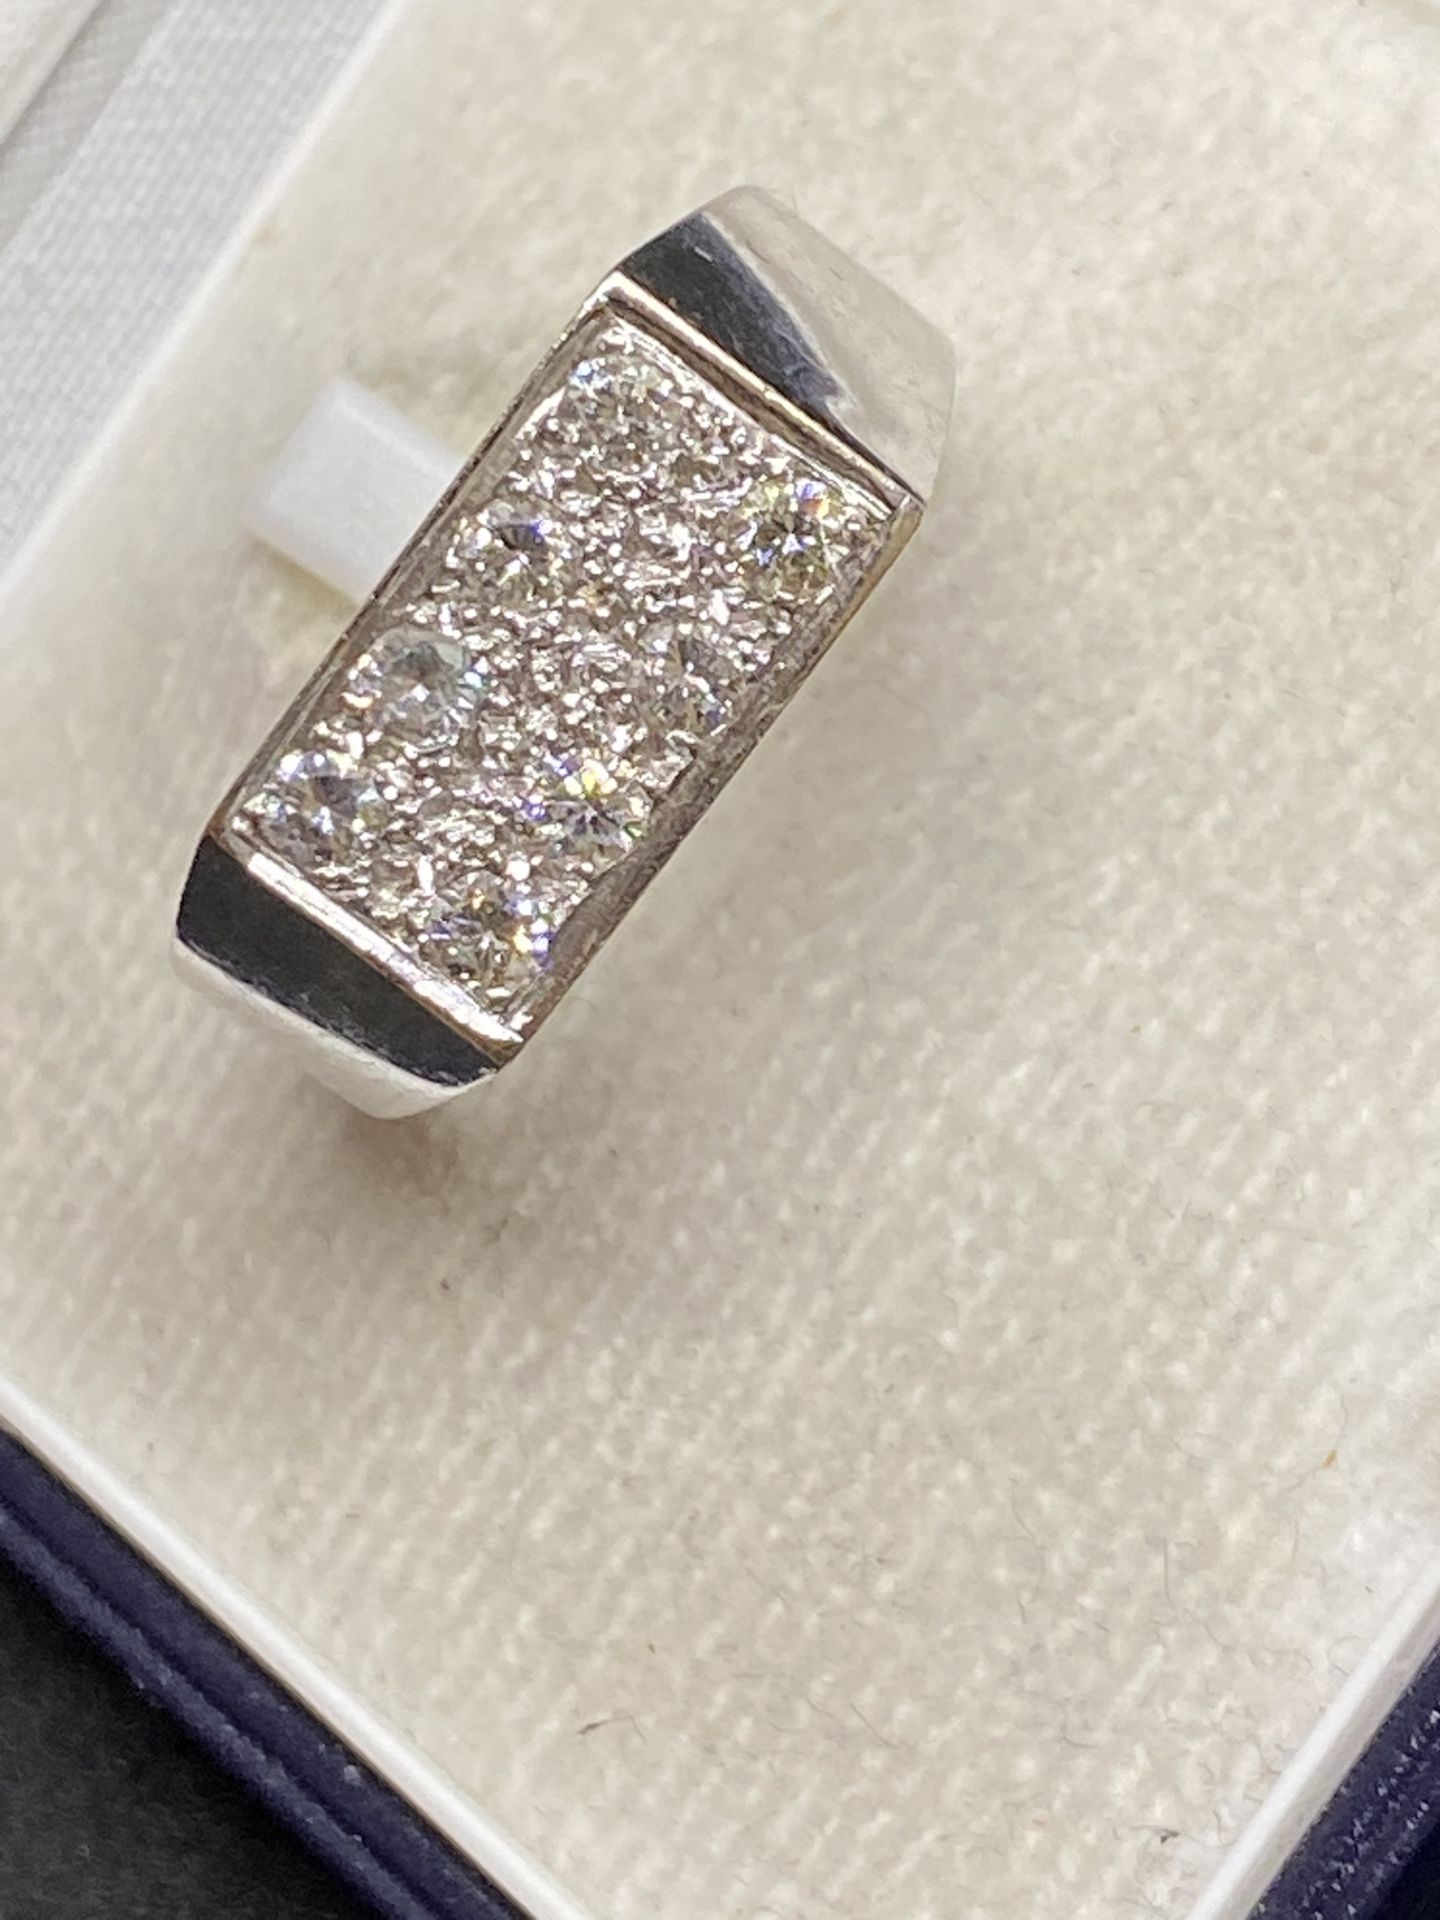 0.60ct DIAMOND RING SET IN WHITE METAL - TESTED AS 18ct GOLD - 9.8 GRAMS